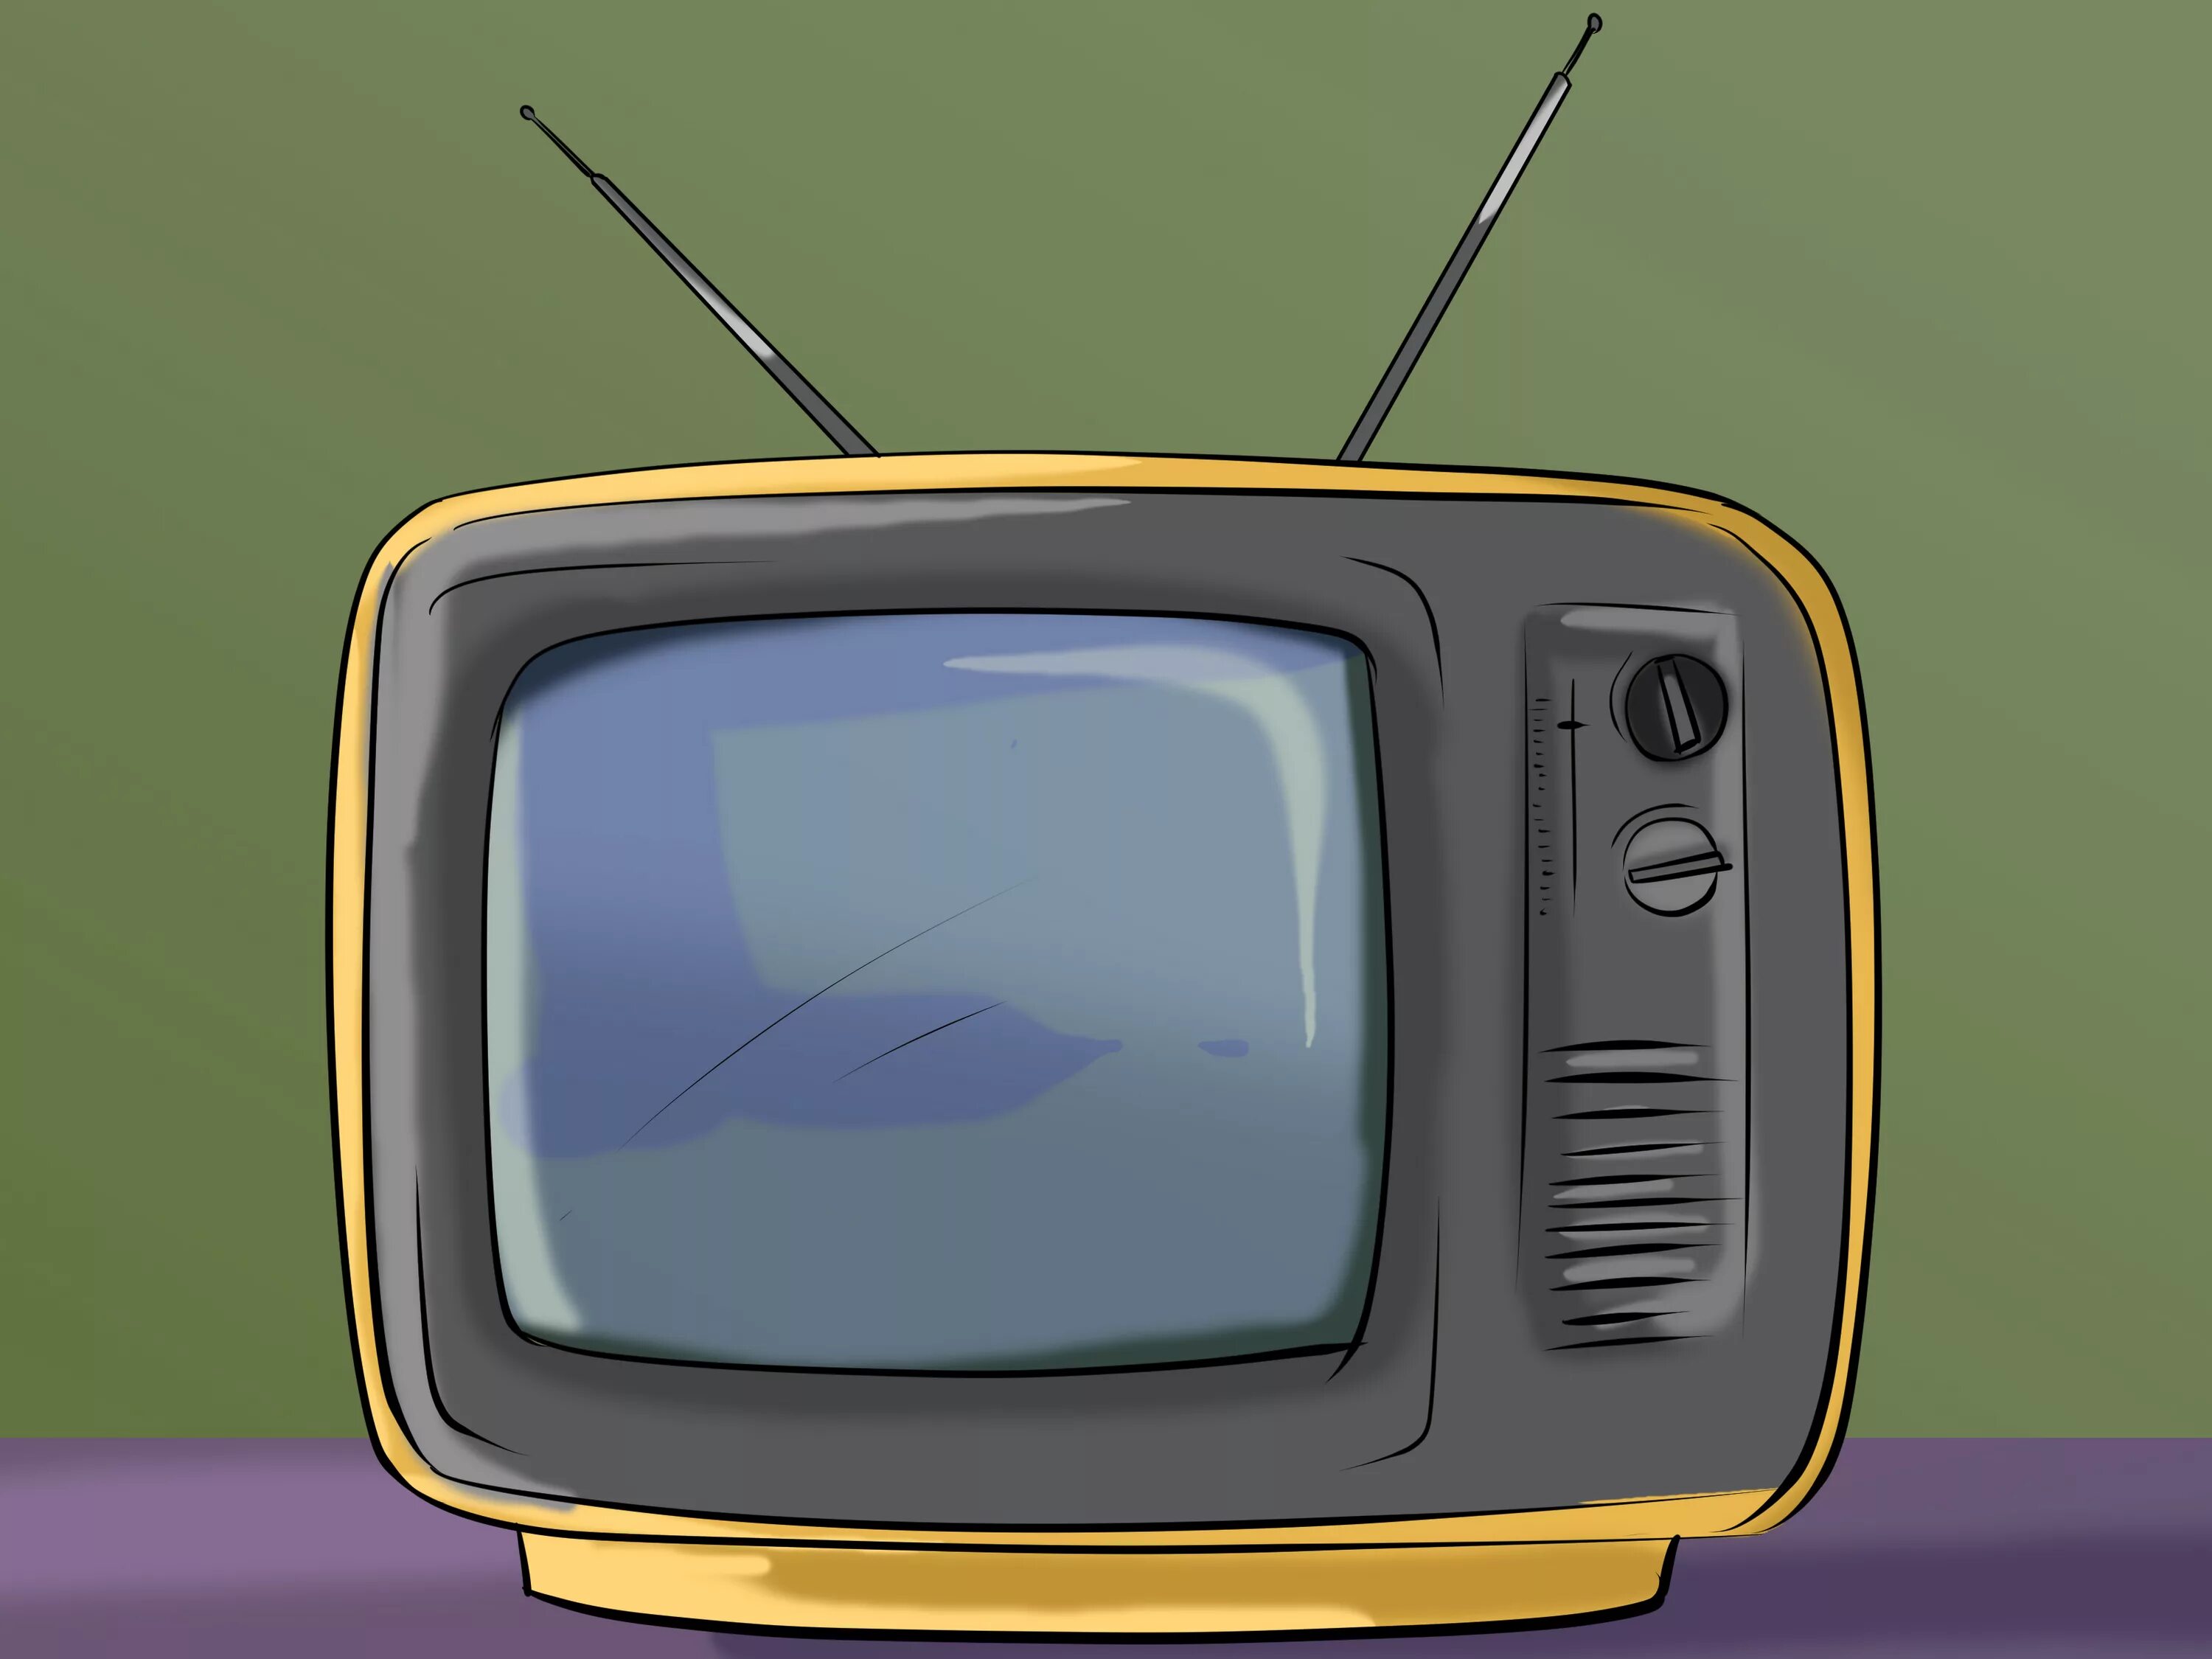 Телевизор мультяшный. Старый телевизор. Телевизор иллюстрация. Телевизор картина.